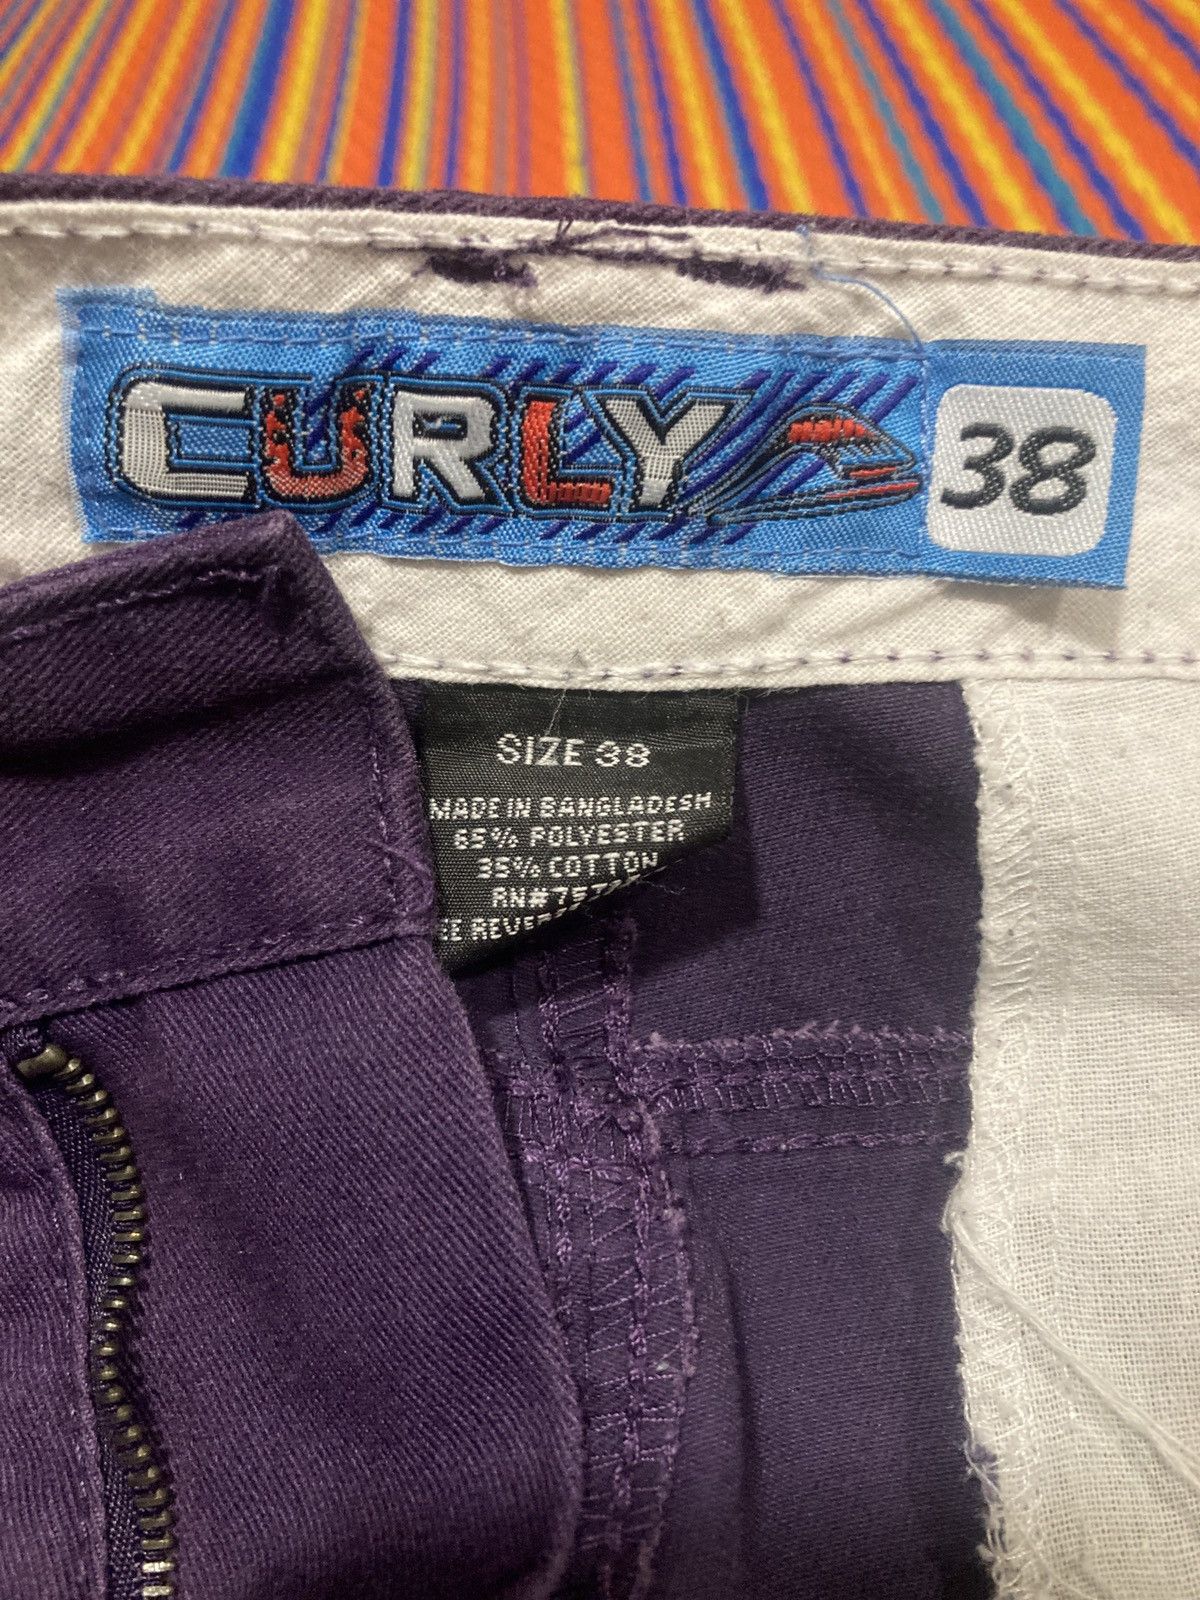 Vintage vintage 90’s y2k curly purple baggy work skate shorts Size US 38 / EU 54 - 6 Preview